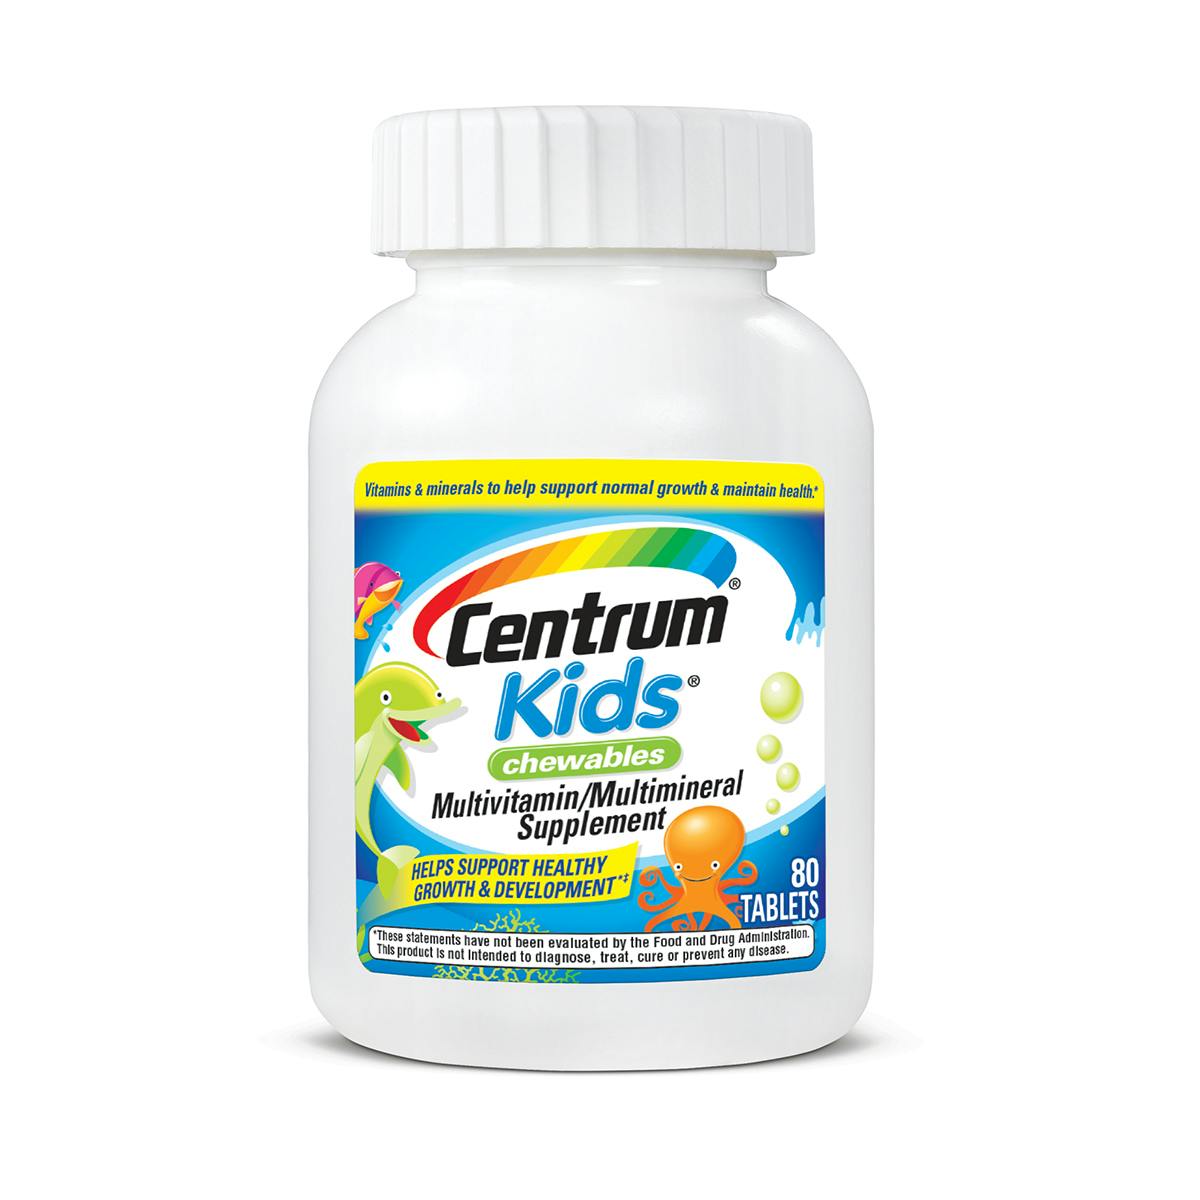 bottle of centrum kids multivitamins